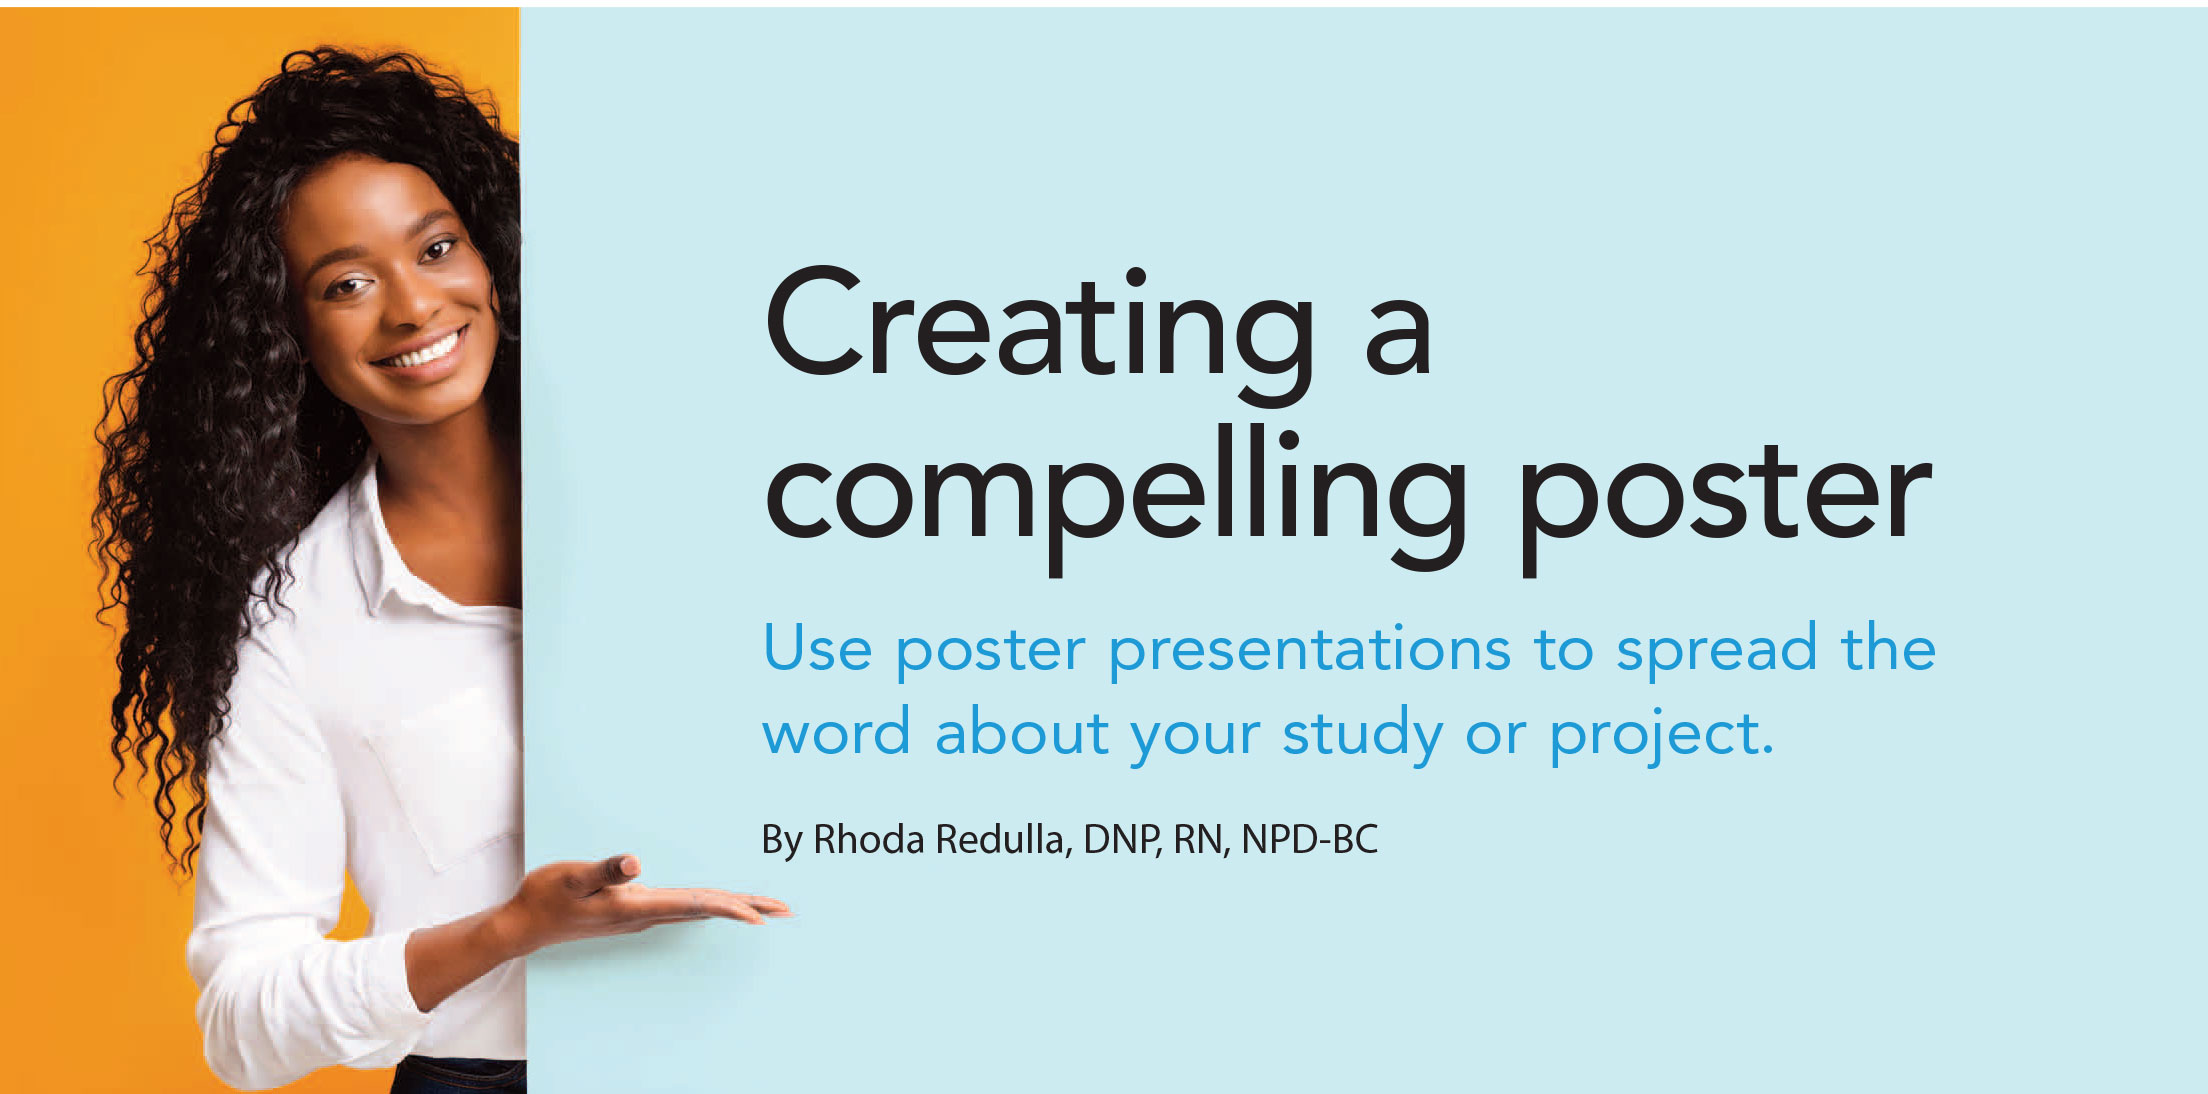 Scientific poster presentation printing services